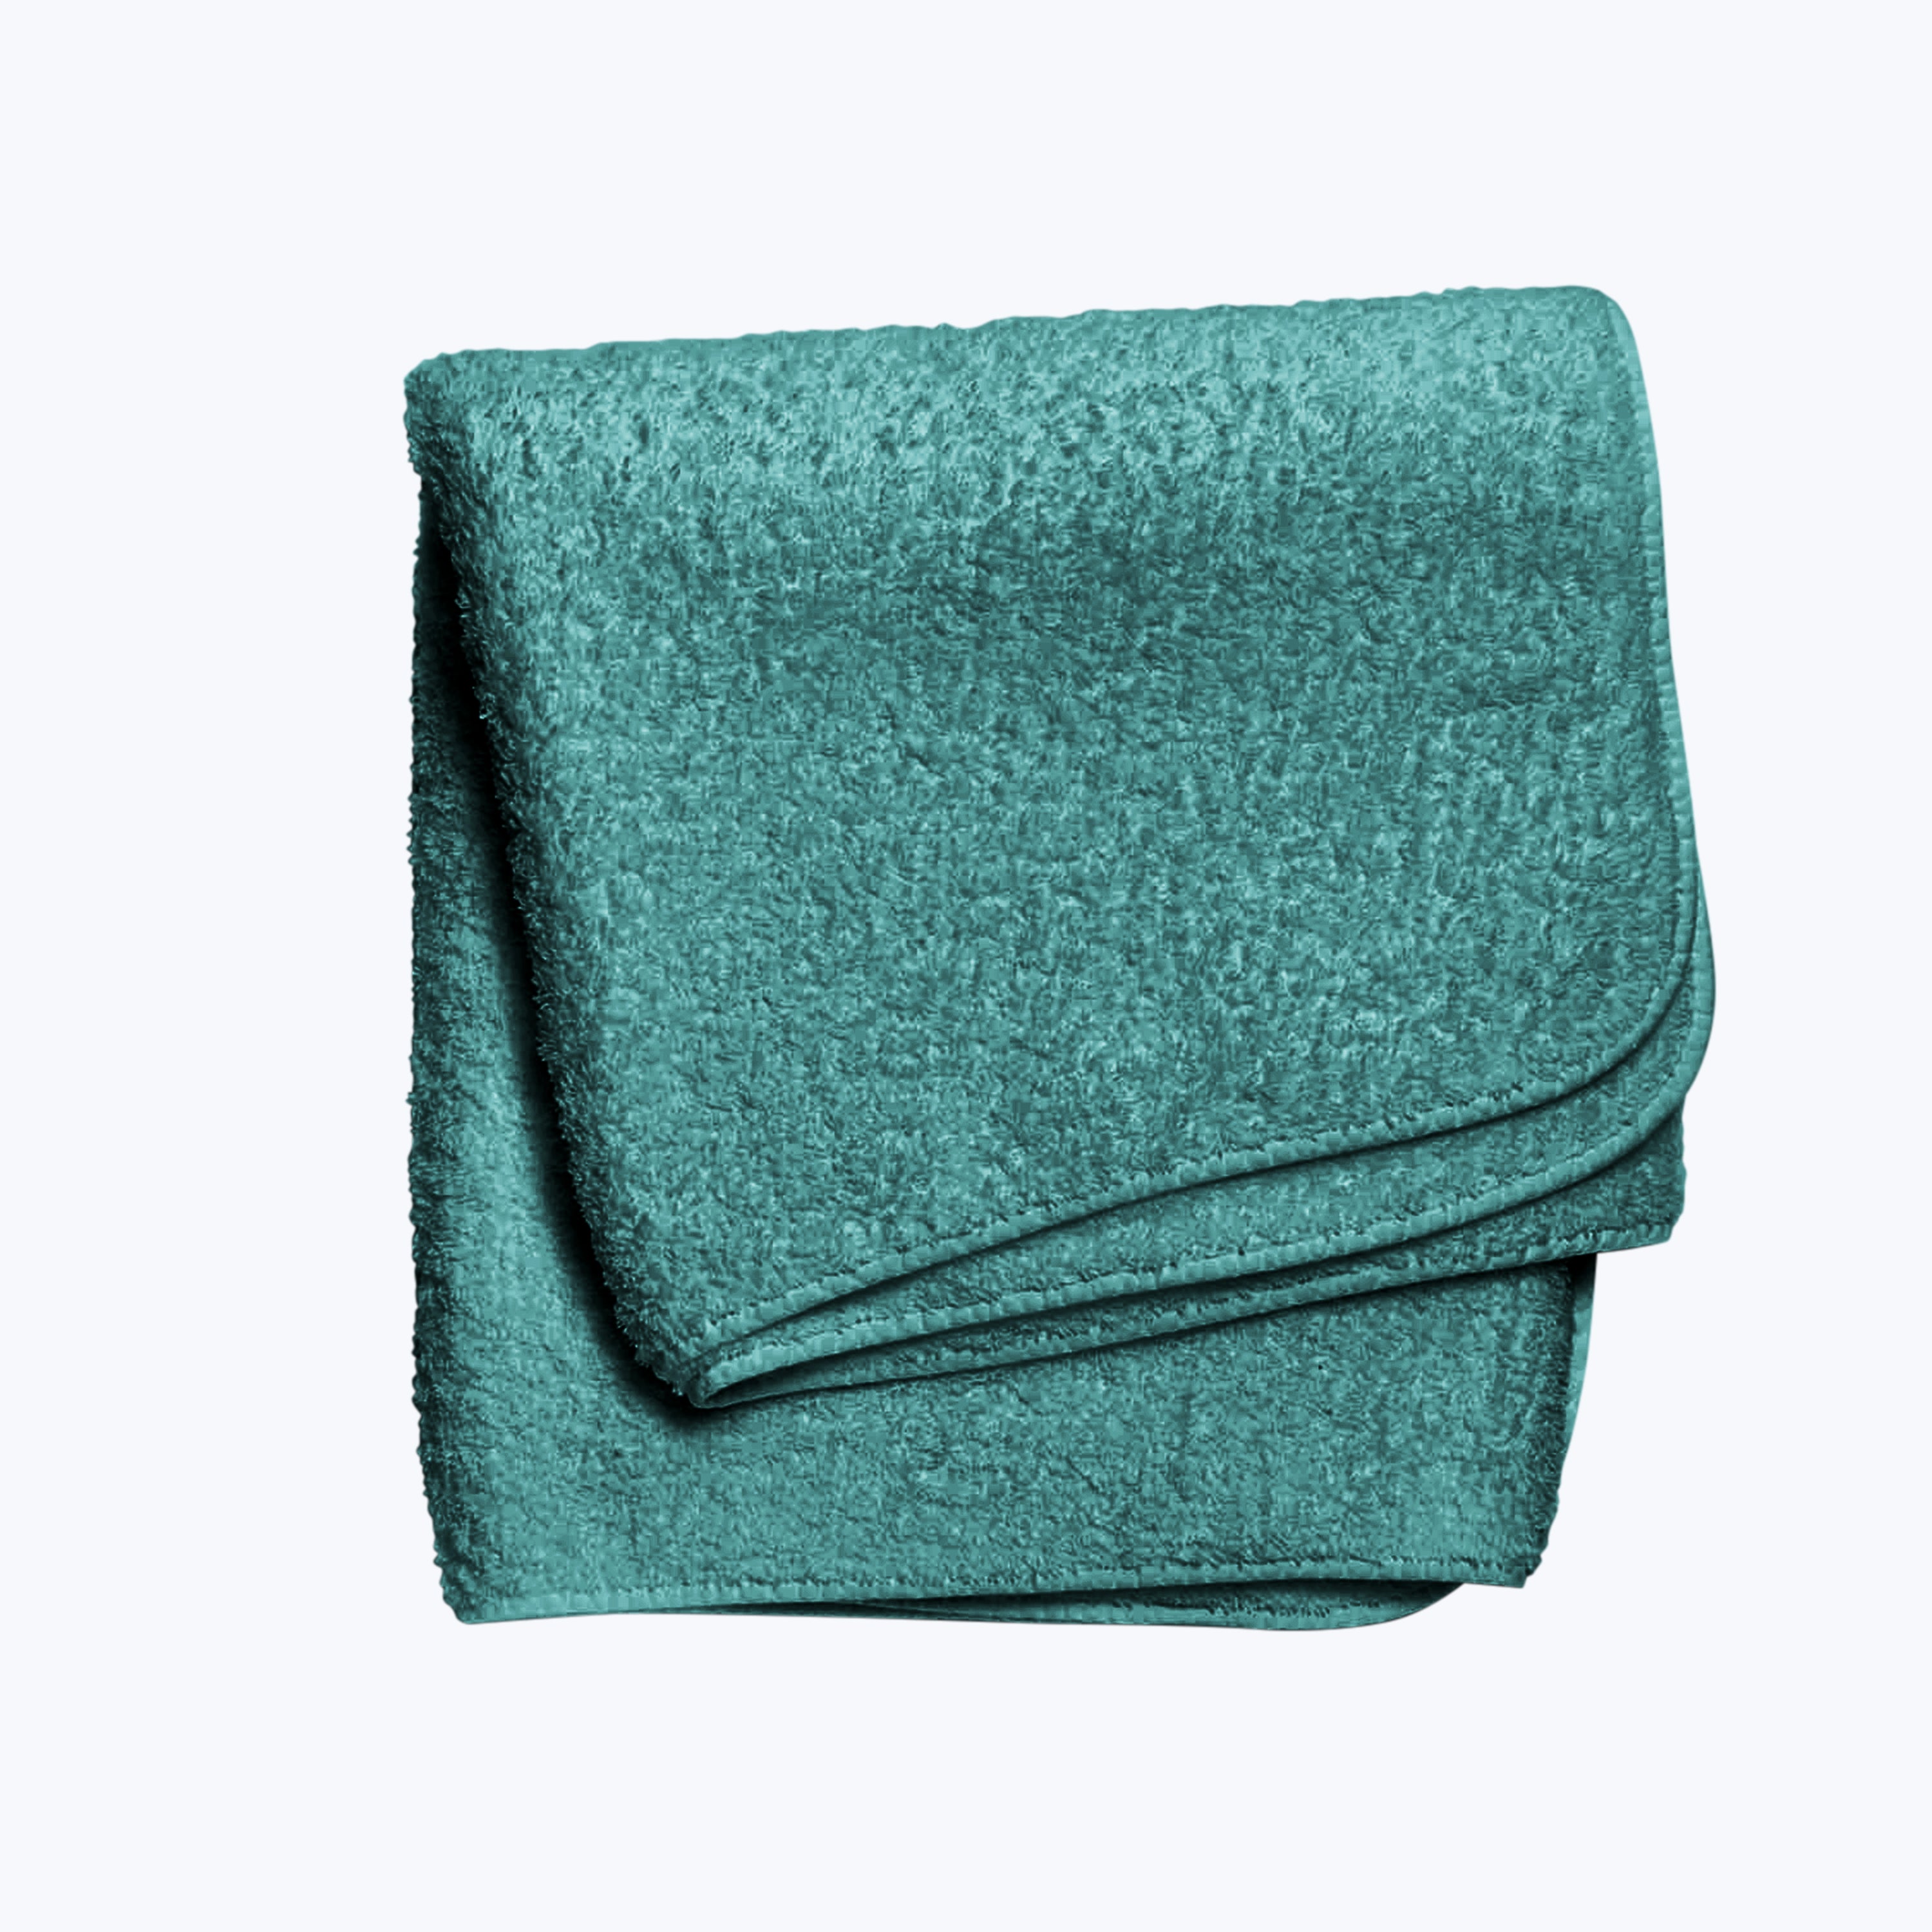 Super Pile Bath Towels, Dragonfly